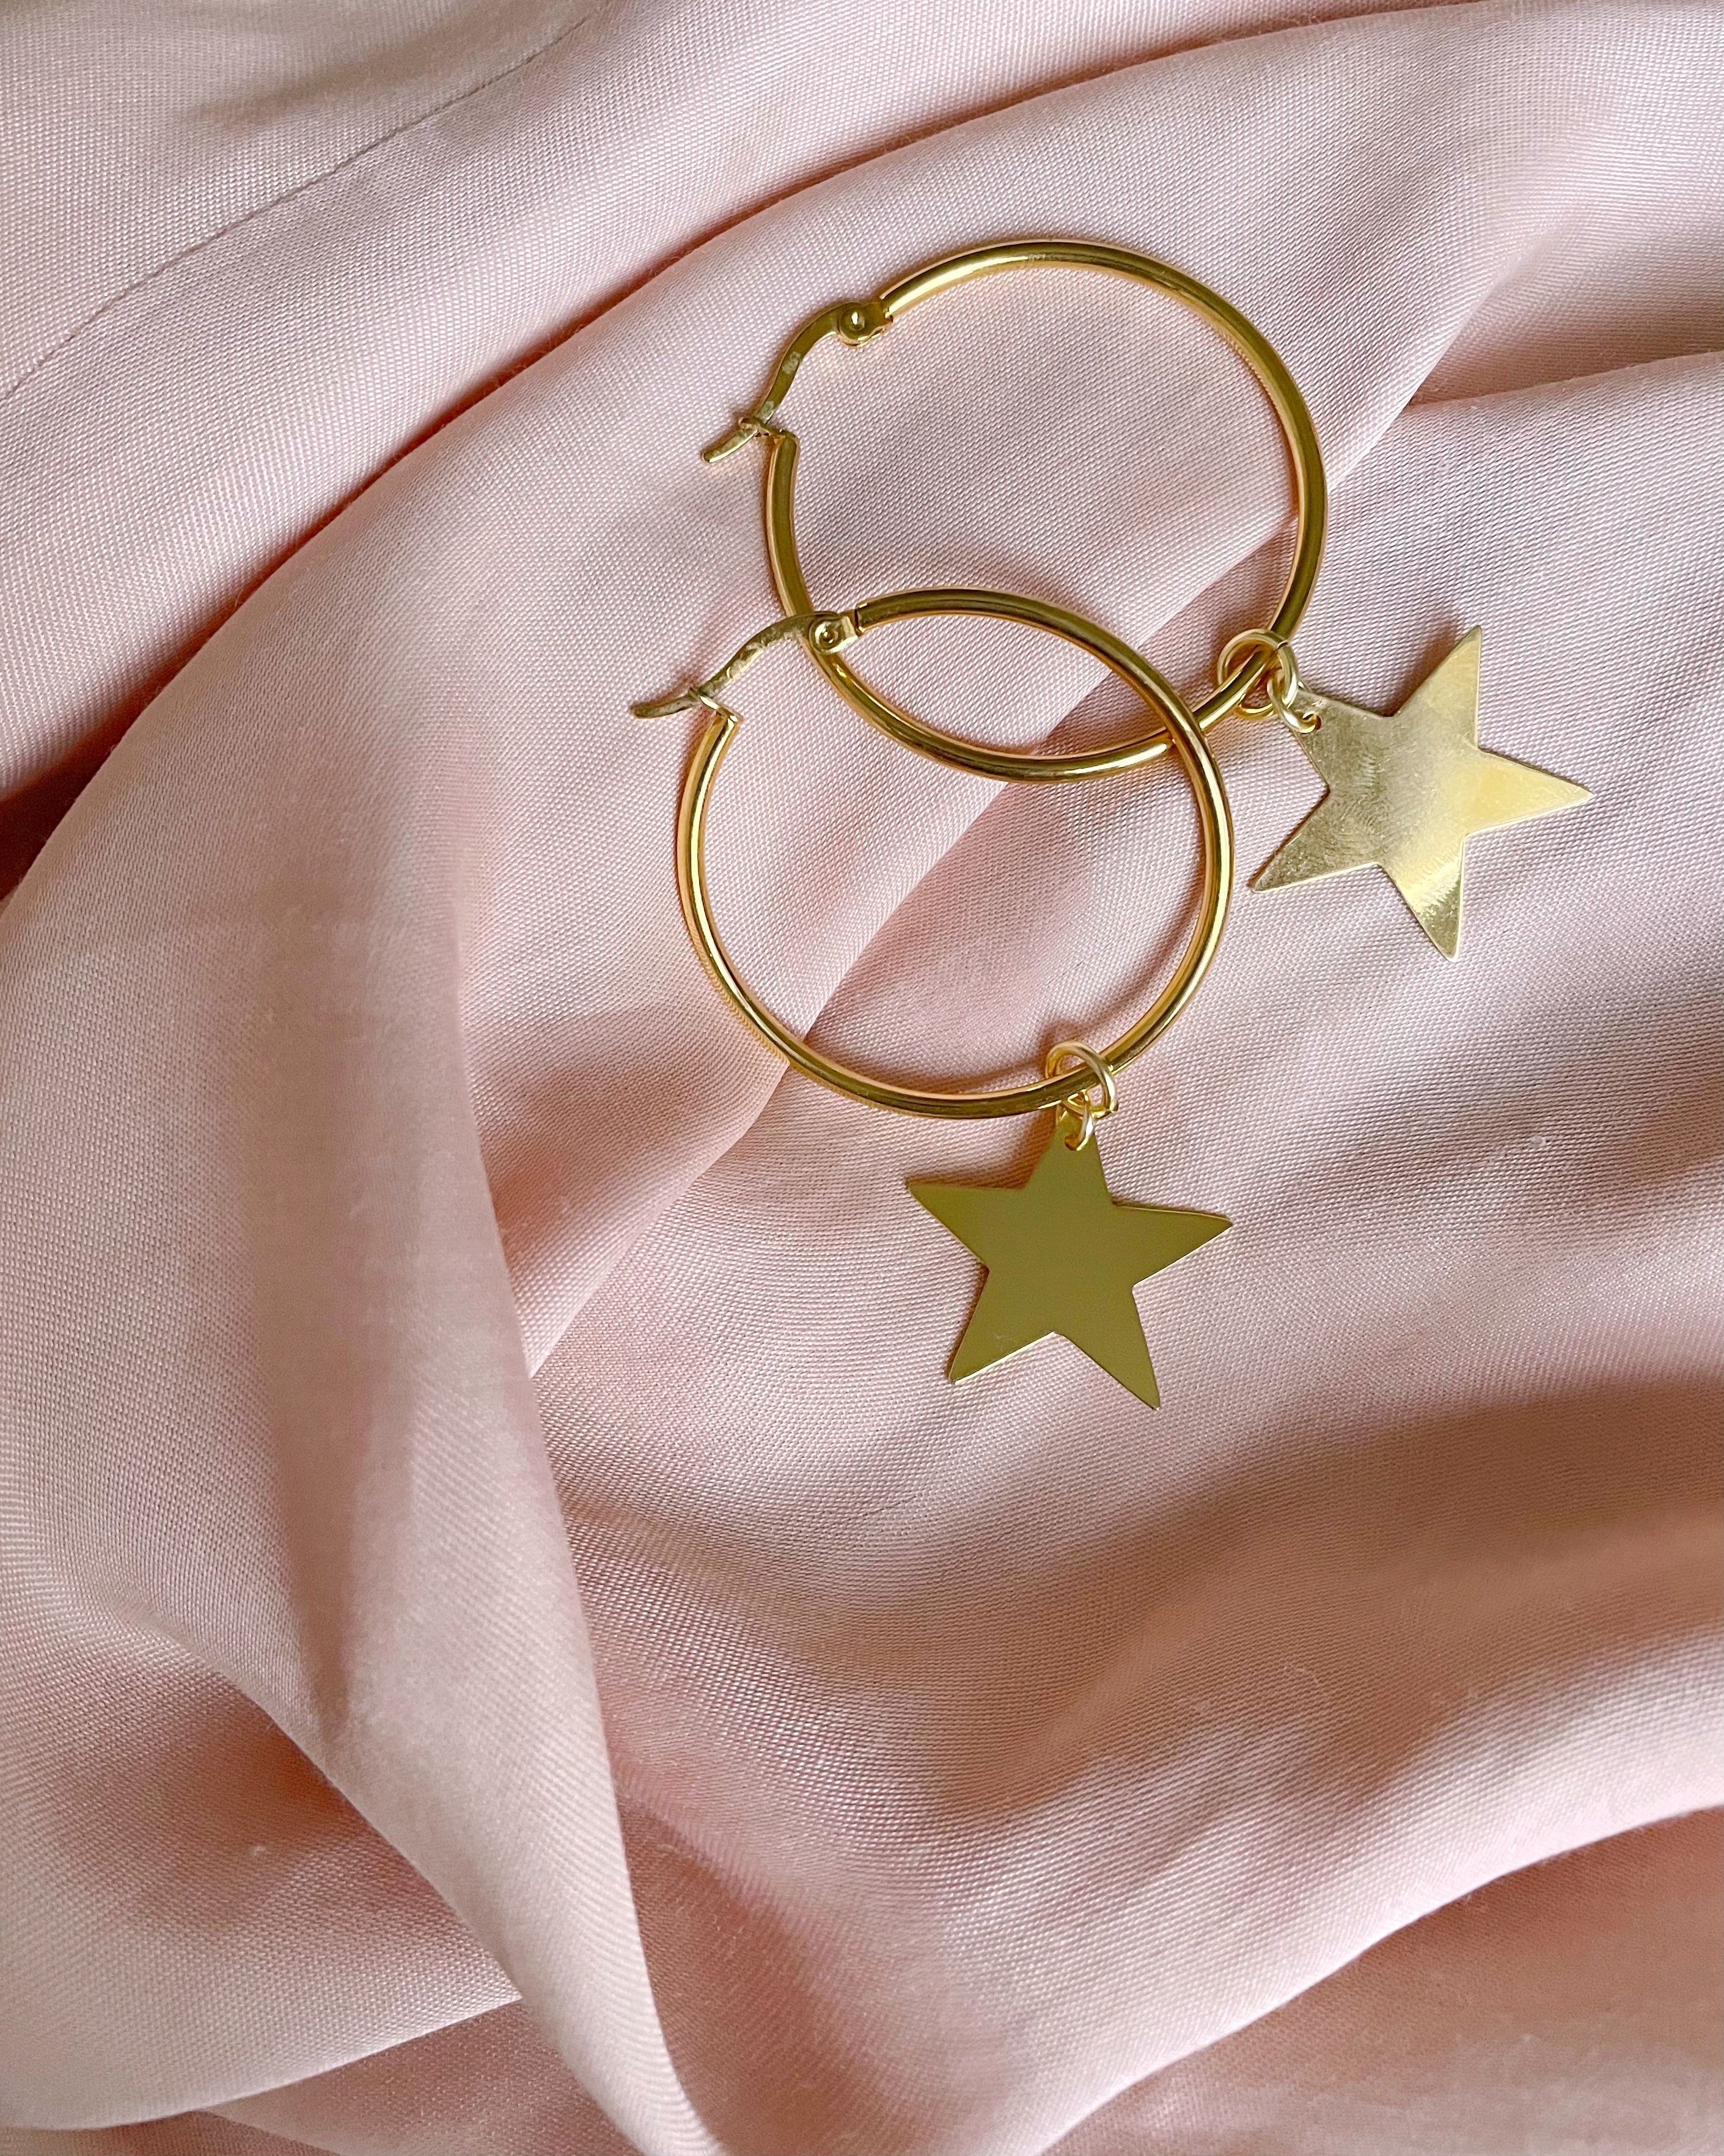 Par de aretes de estrellas doradas sobre una tela rosa